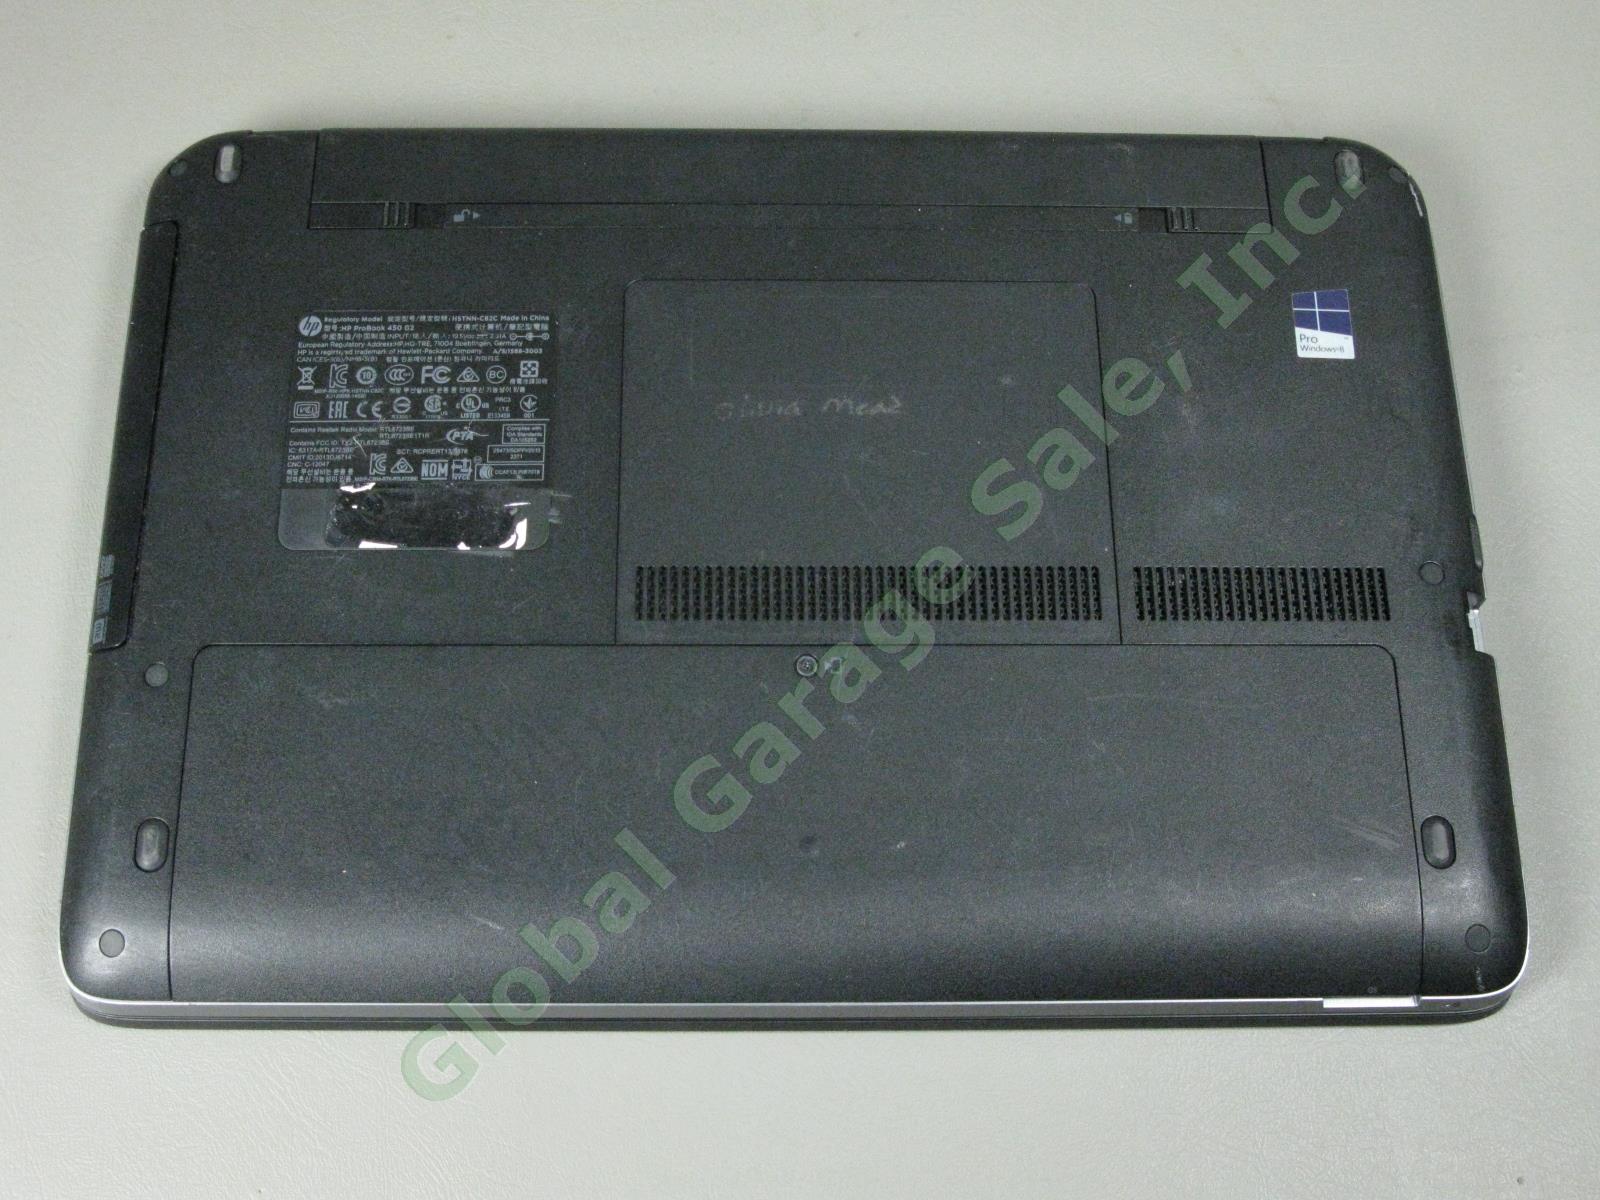 HP ProBook 450 G2 Laptop Computer i5-4210U 2.40GHz 4GB 460GB Win 10 Professional 9